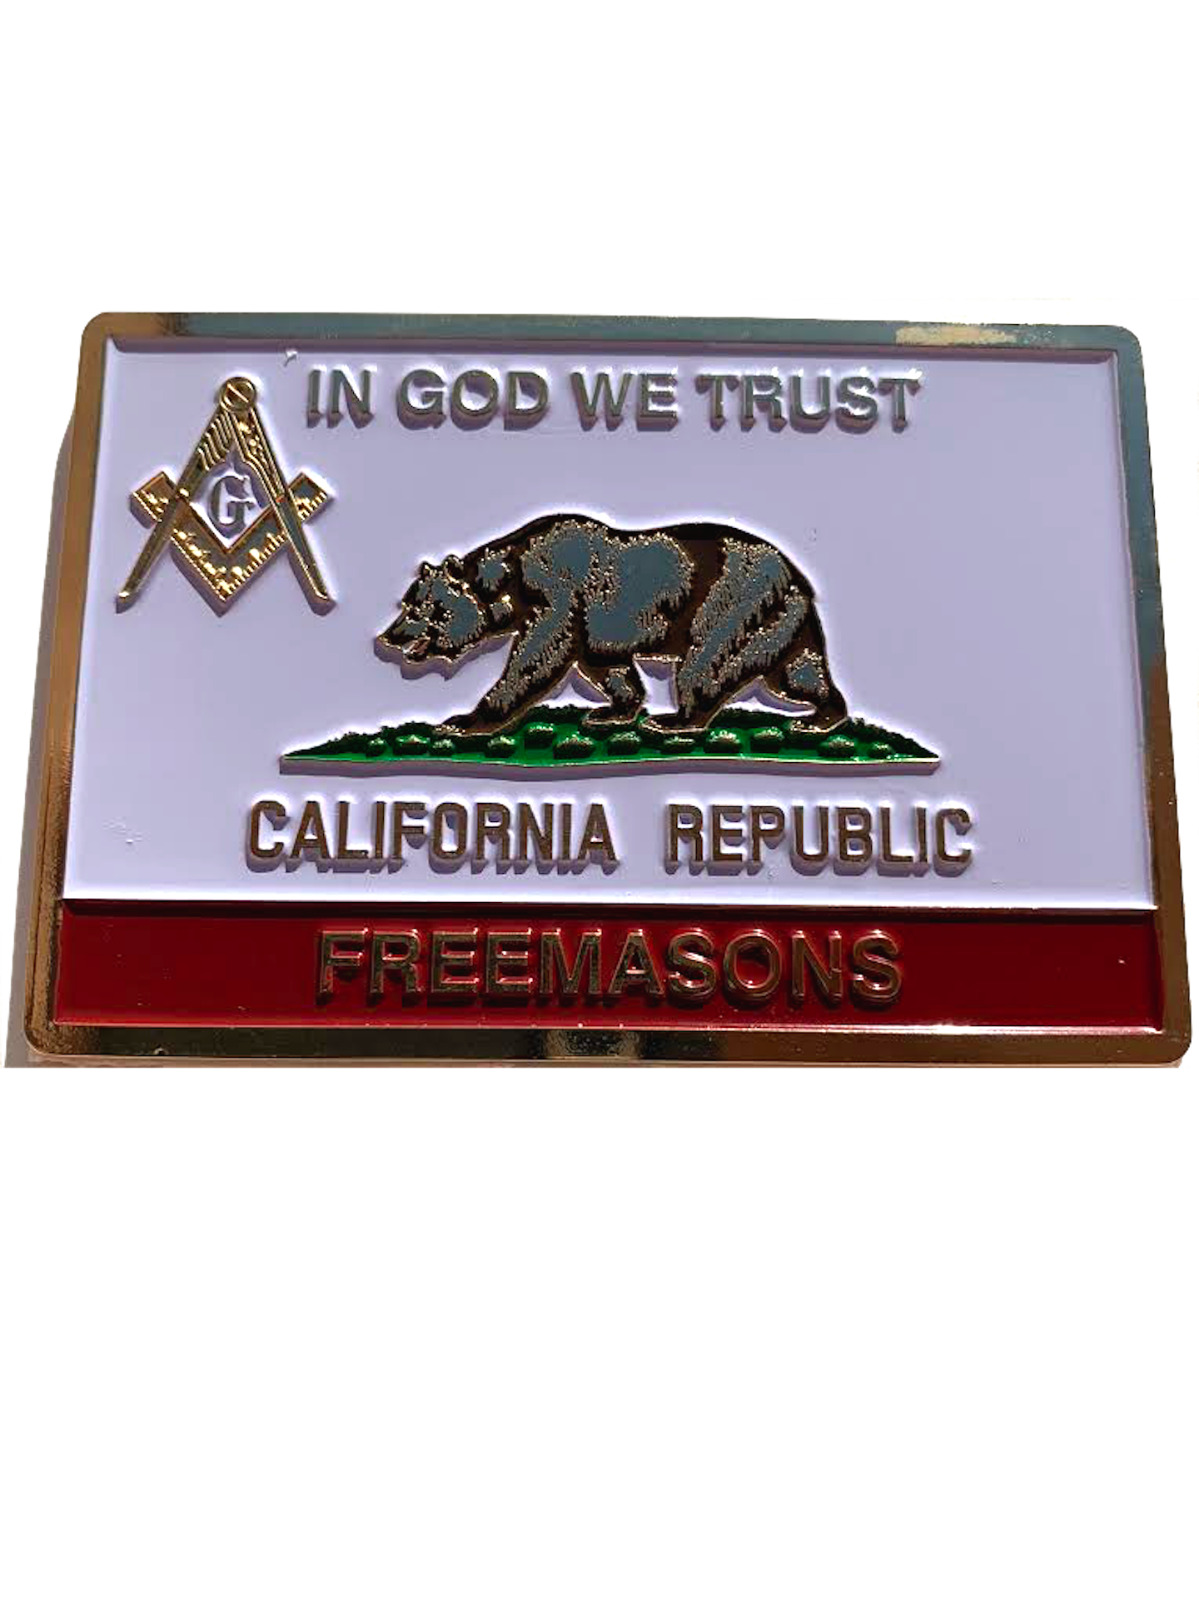 California Republic Freemasons Plate heavy Duty Auto Car Truck Emblem original